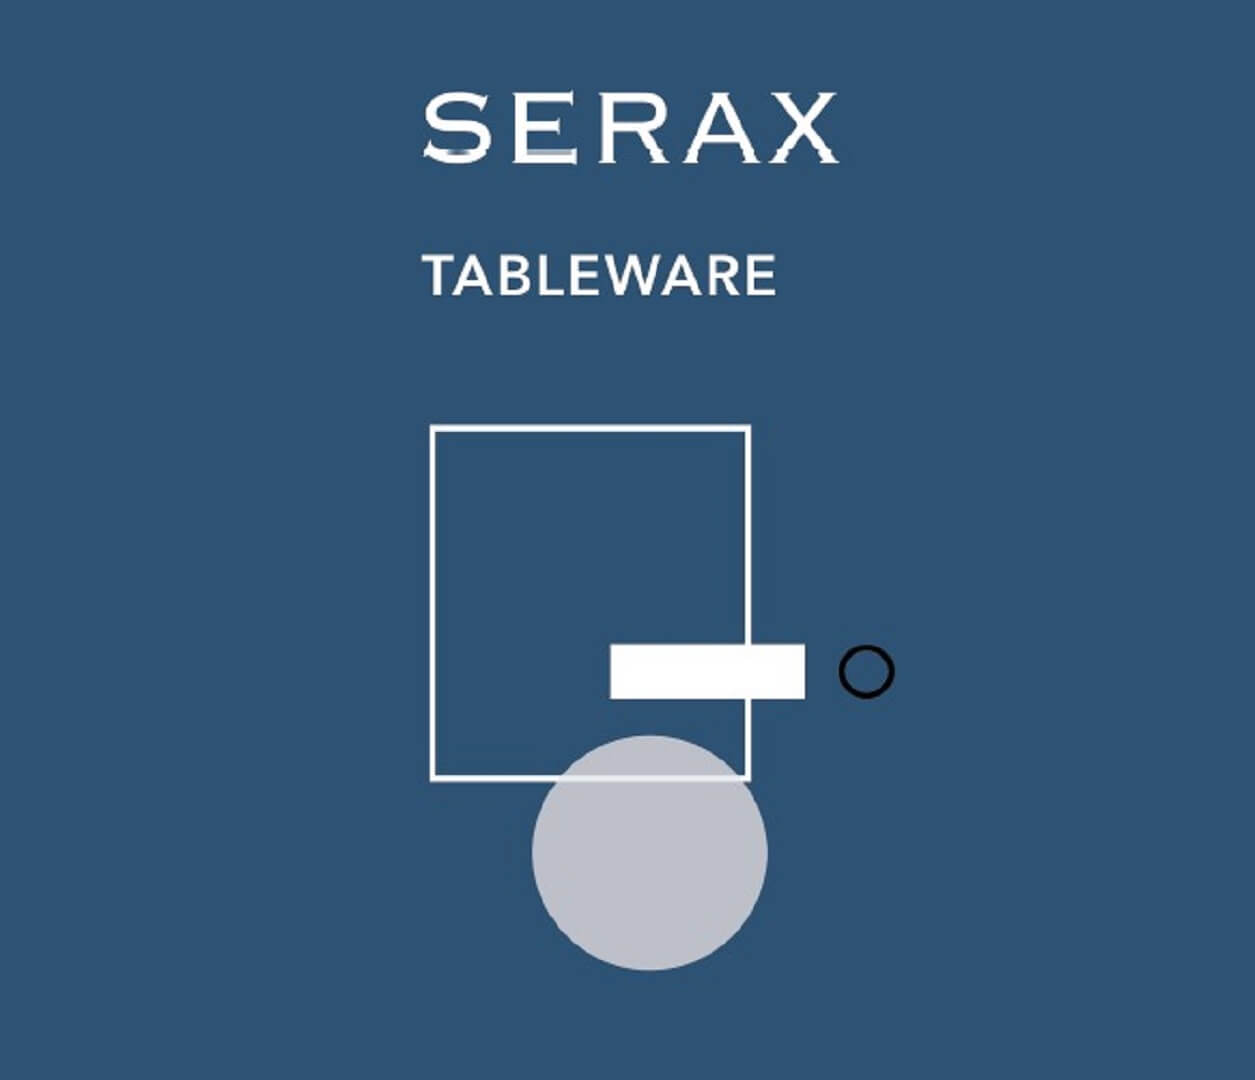 Serax - Tableware 2020